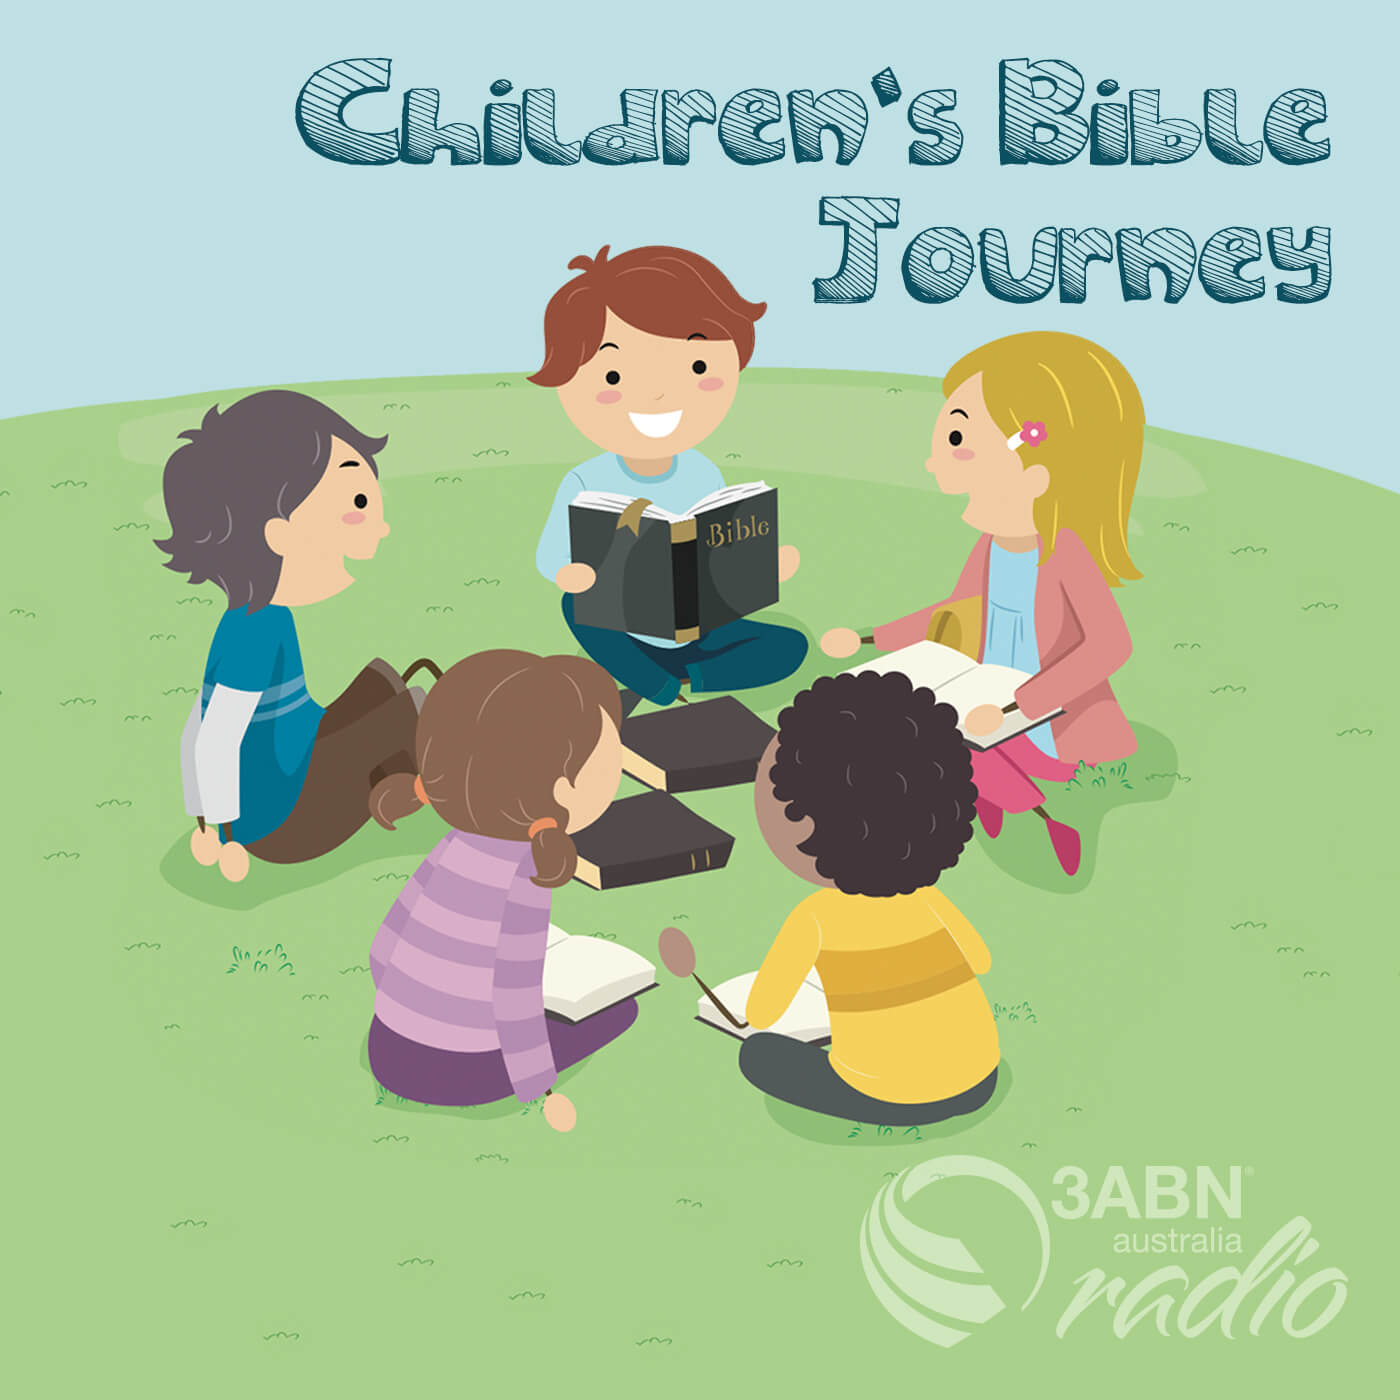 Children's Bible Journey - 2130